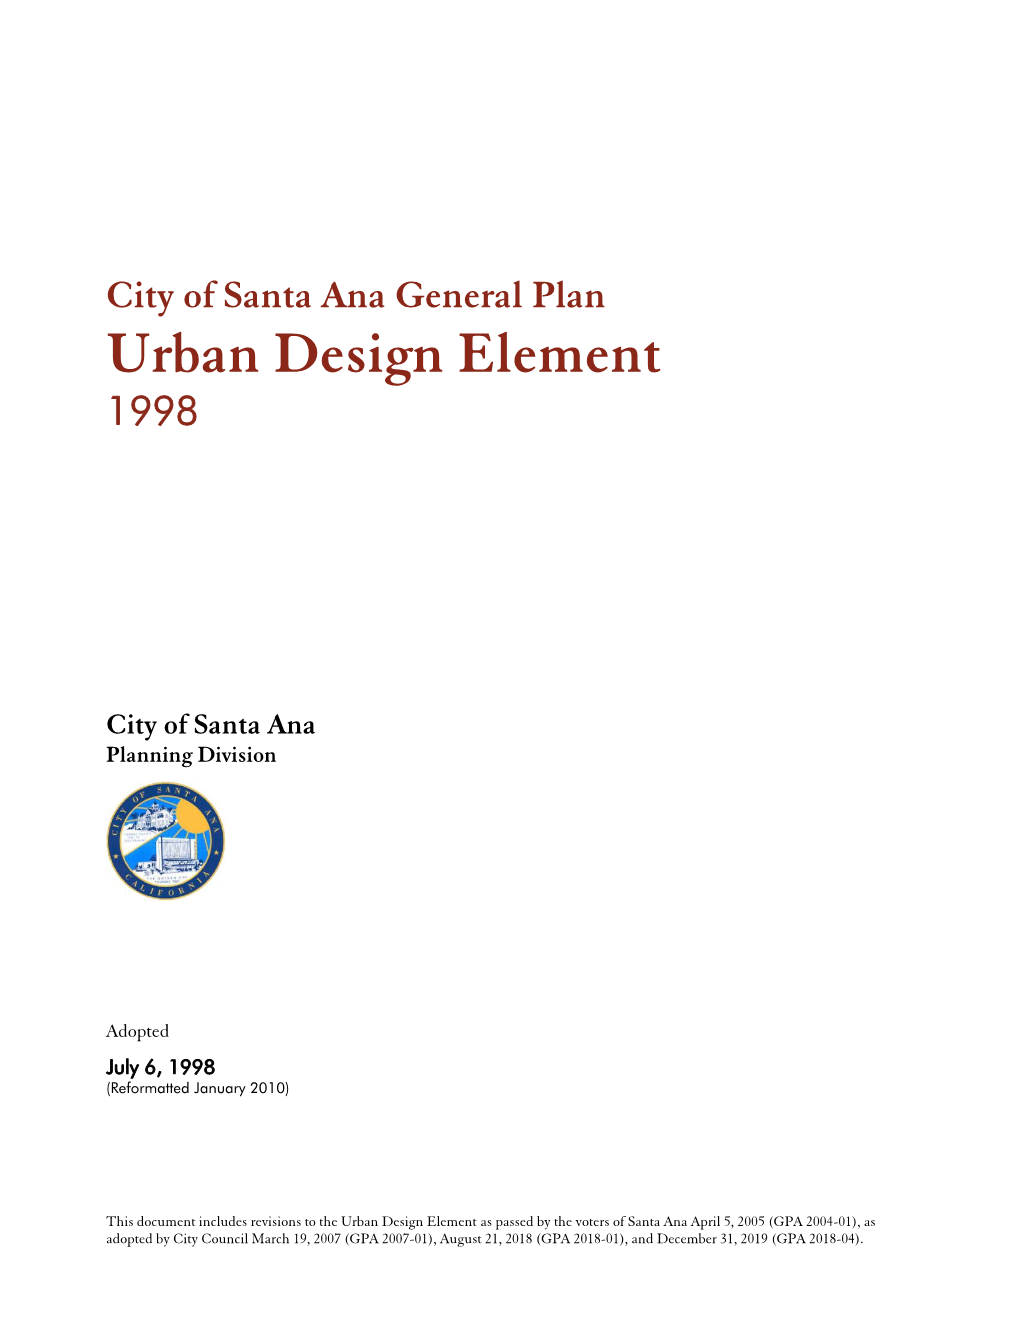 Urban Design Element 1998